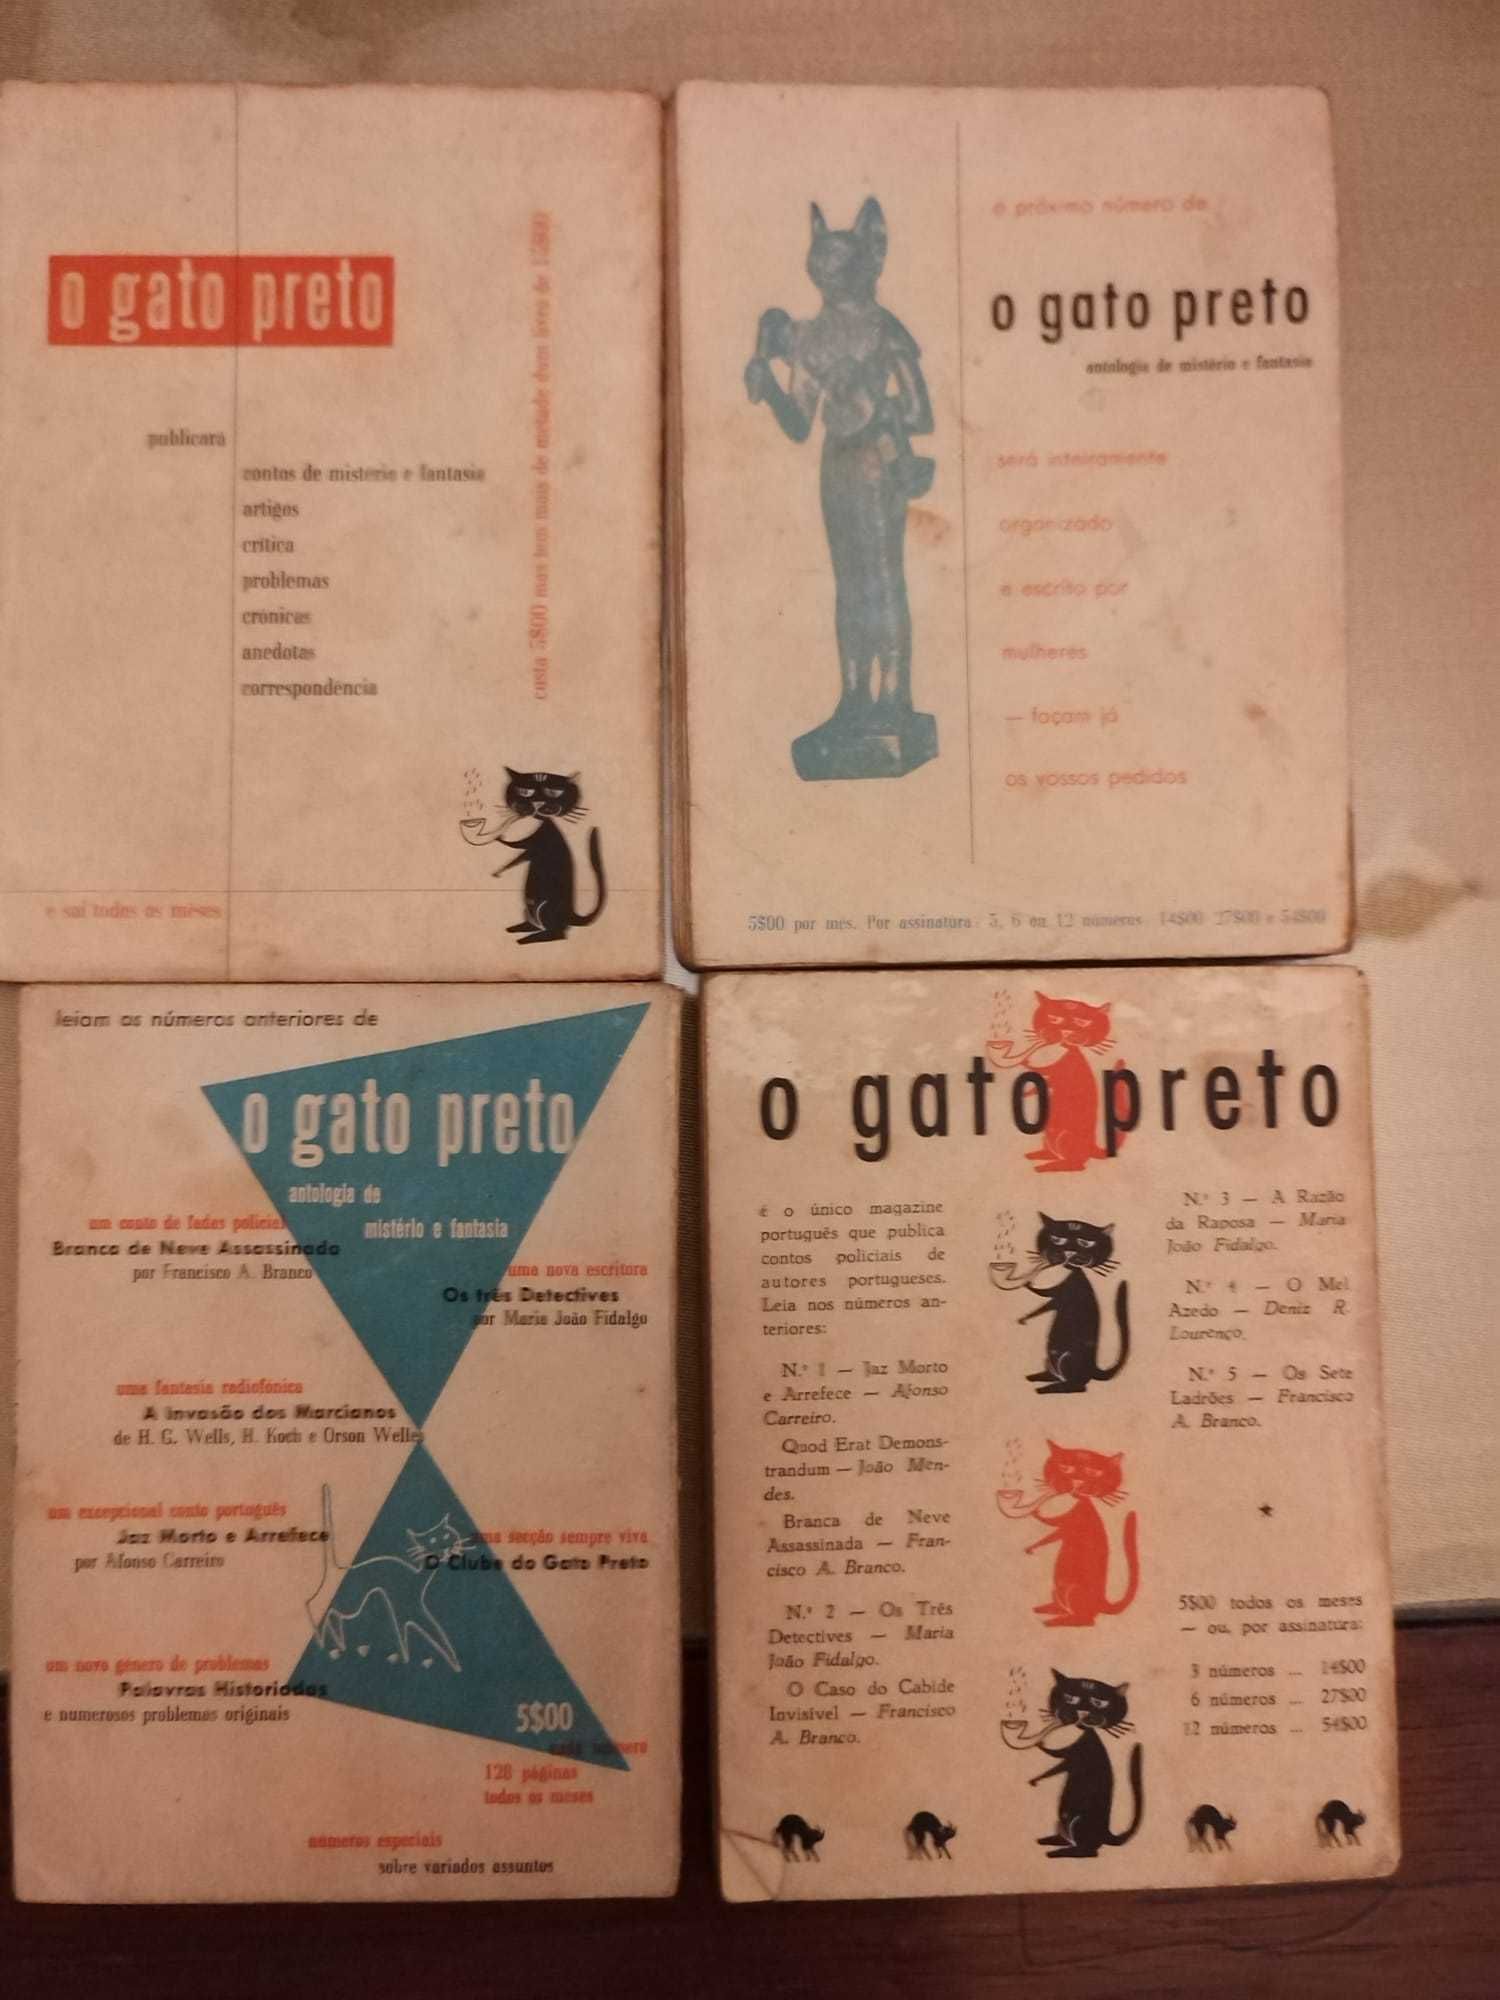 O GATO PRETO - Antologia de Mistério e Fantasia Volumes 1, 2, 5 e 6